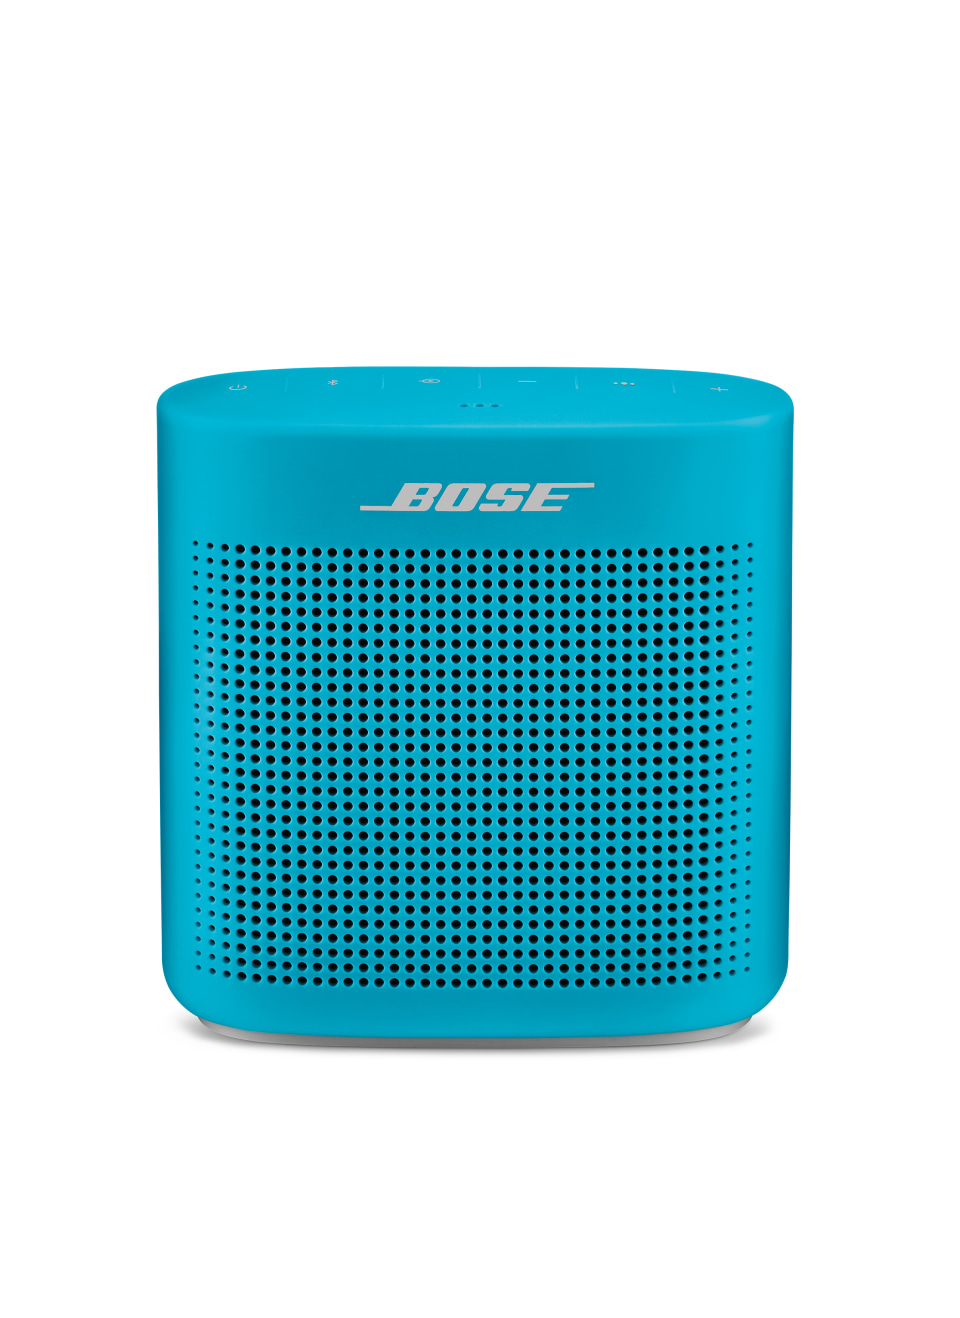 bose speakers bluetooth